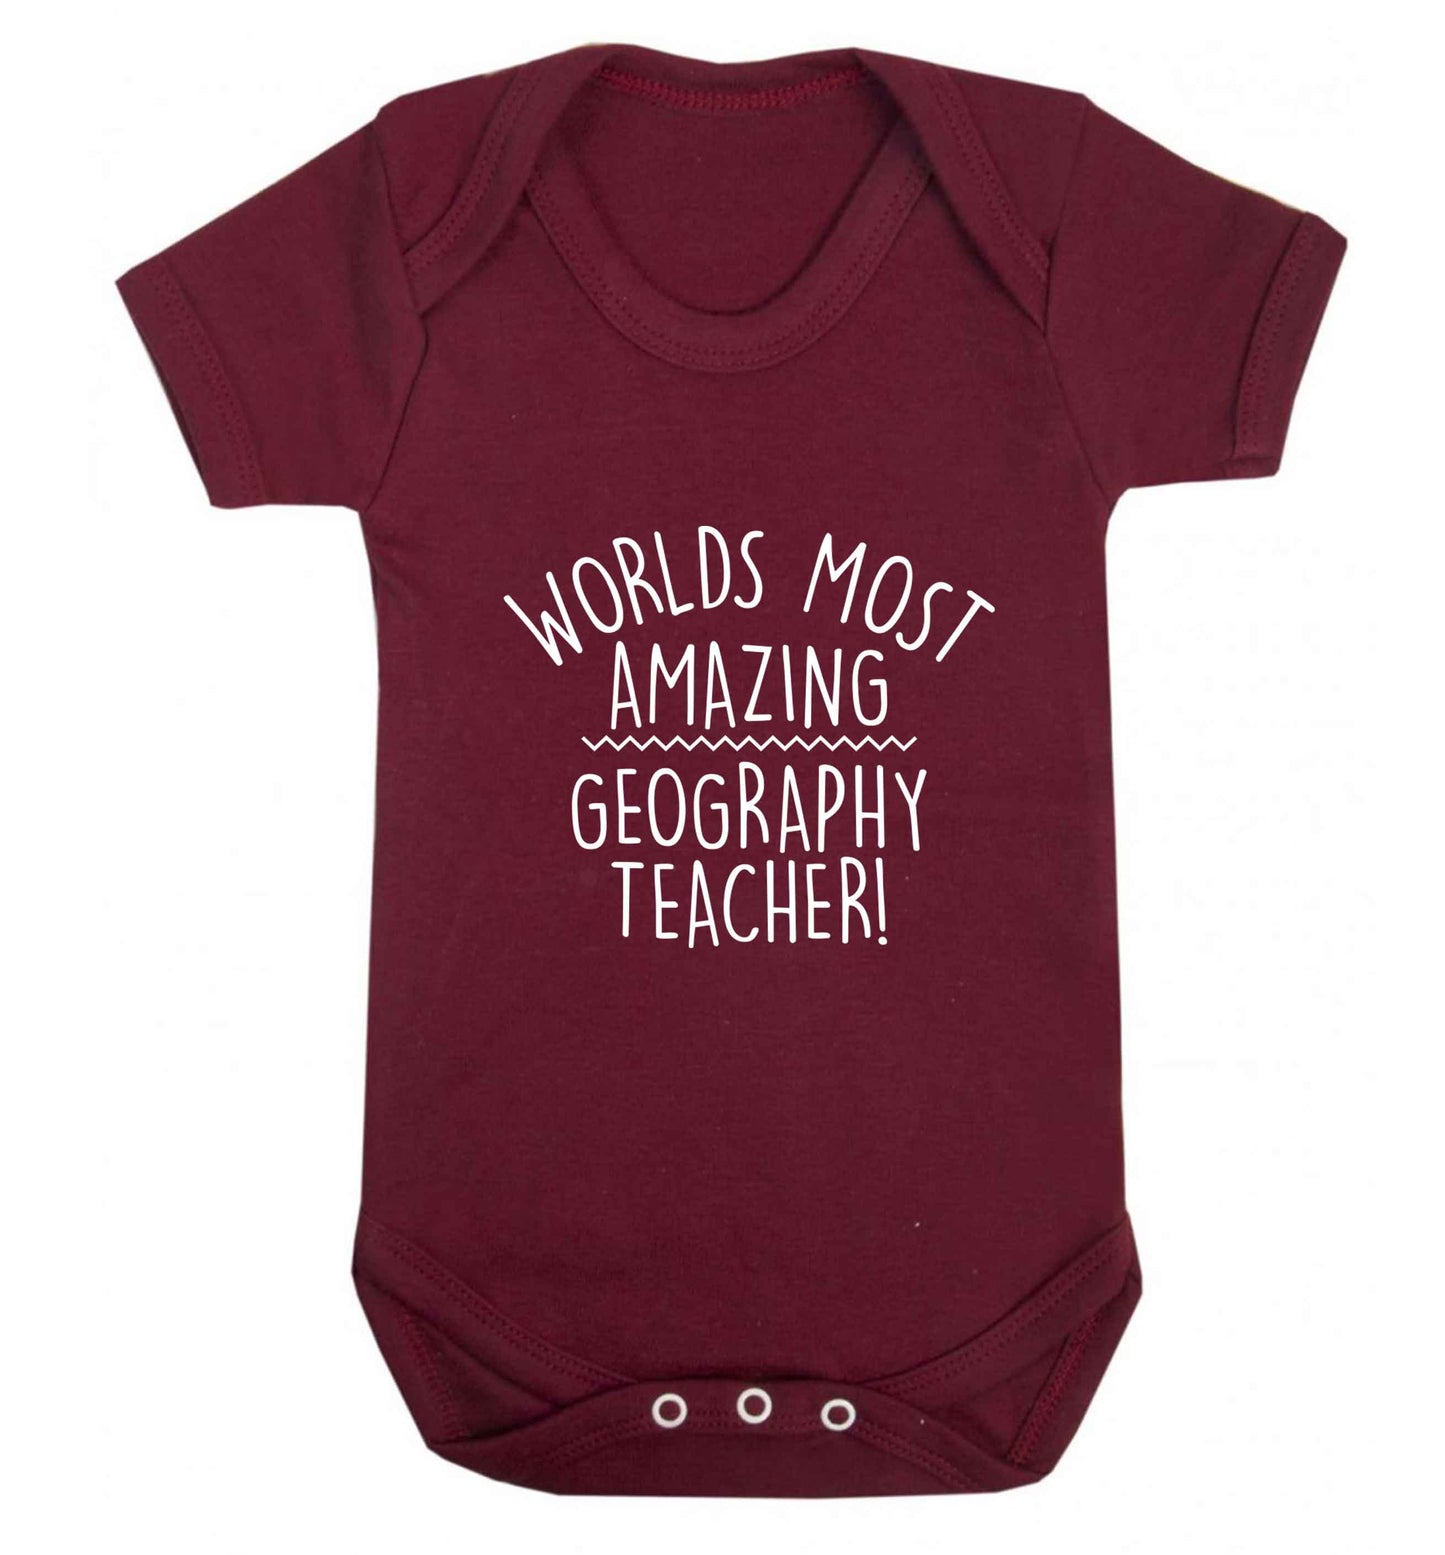 Worlds most amazing geography teacher baby vest maroon 18-24 months